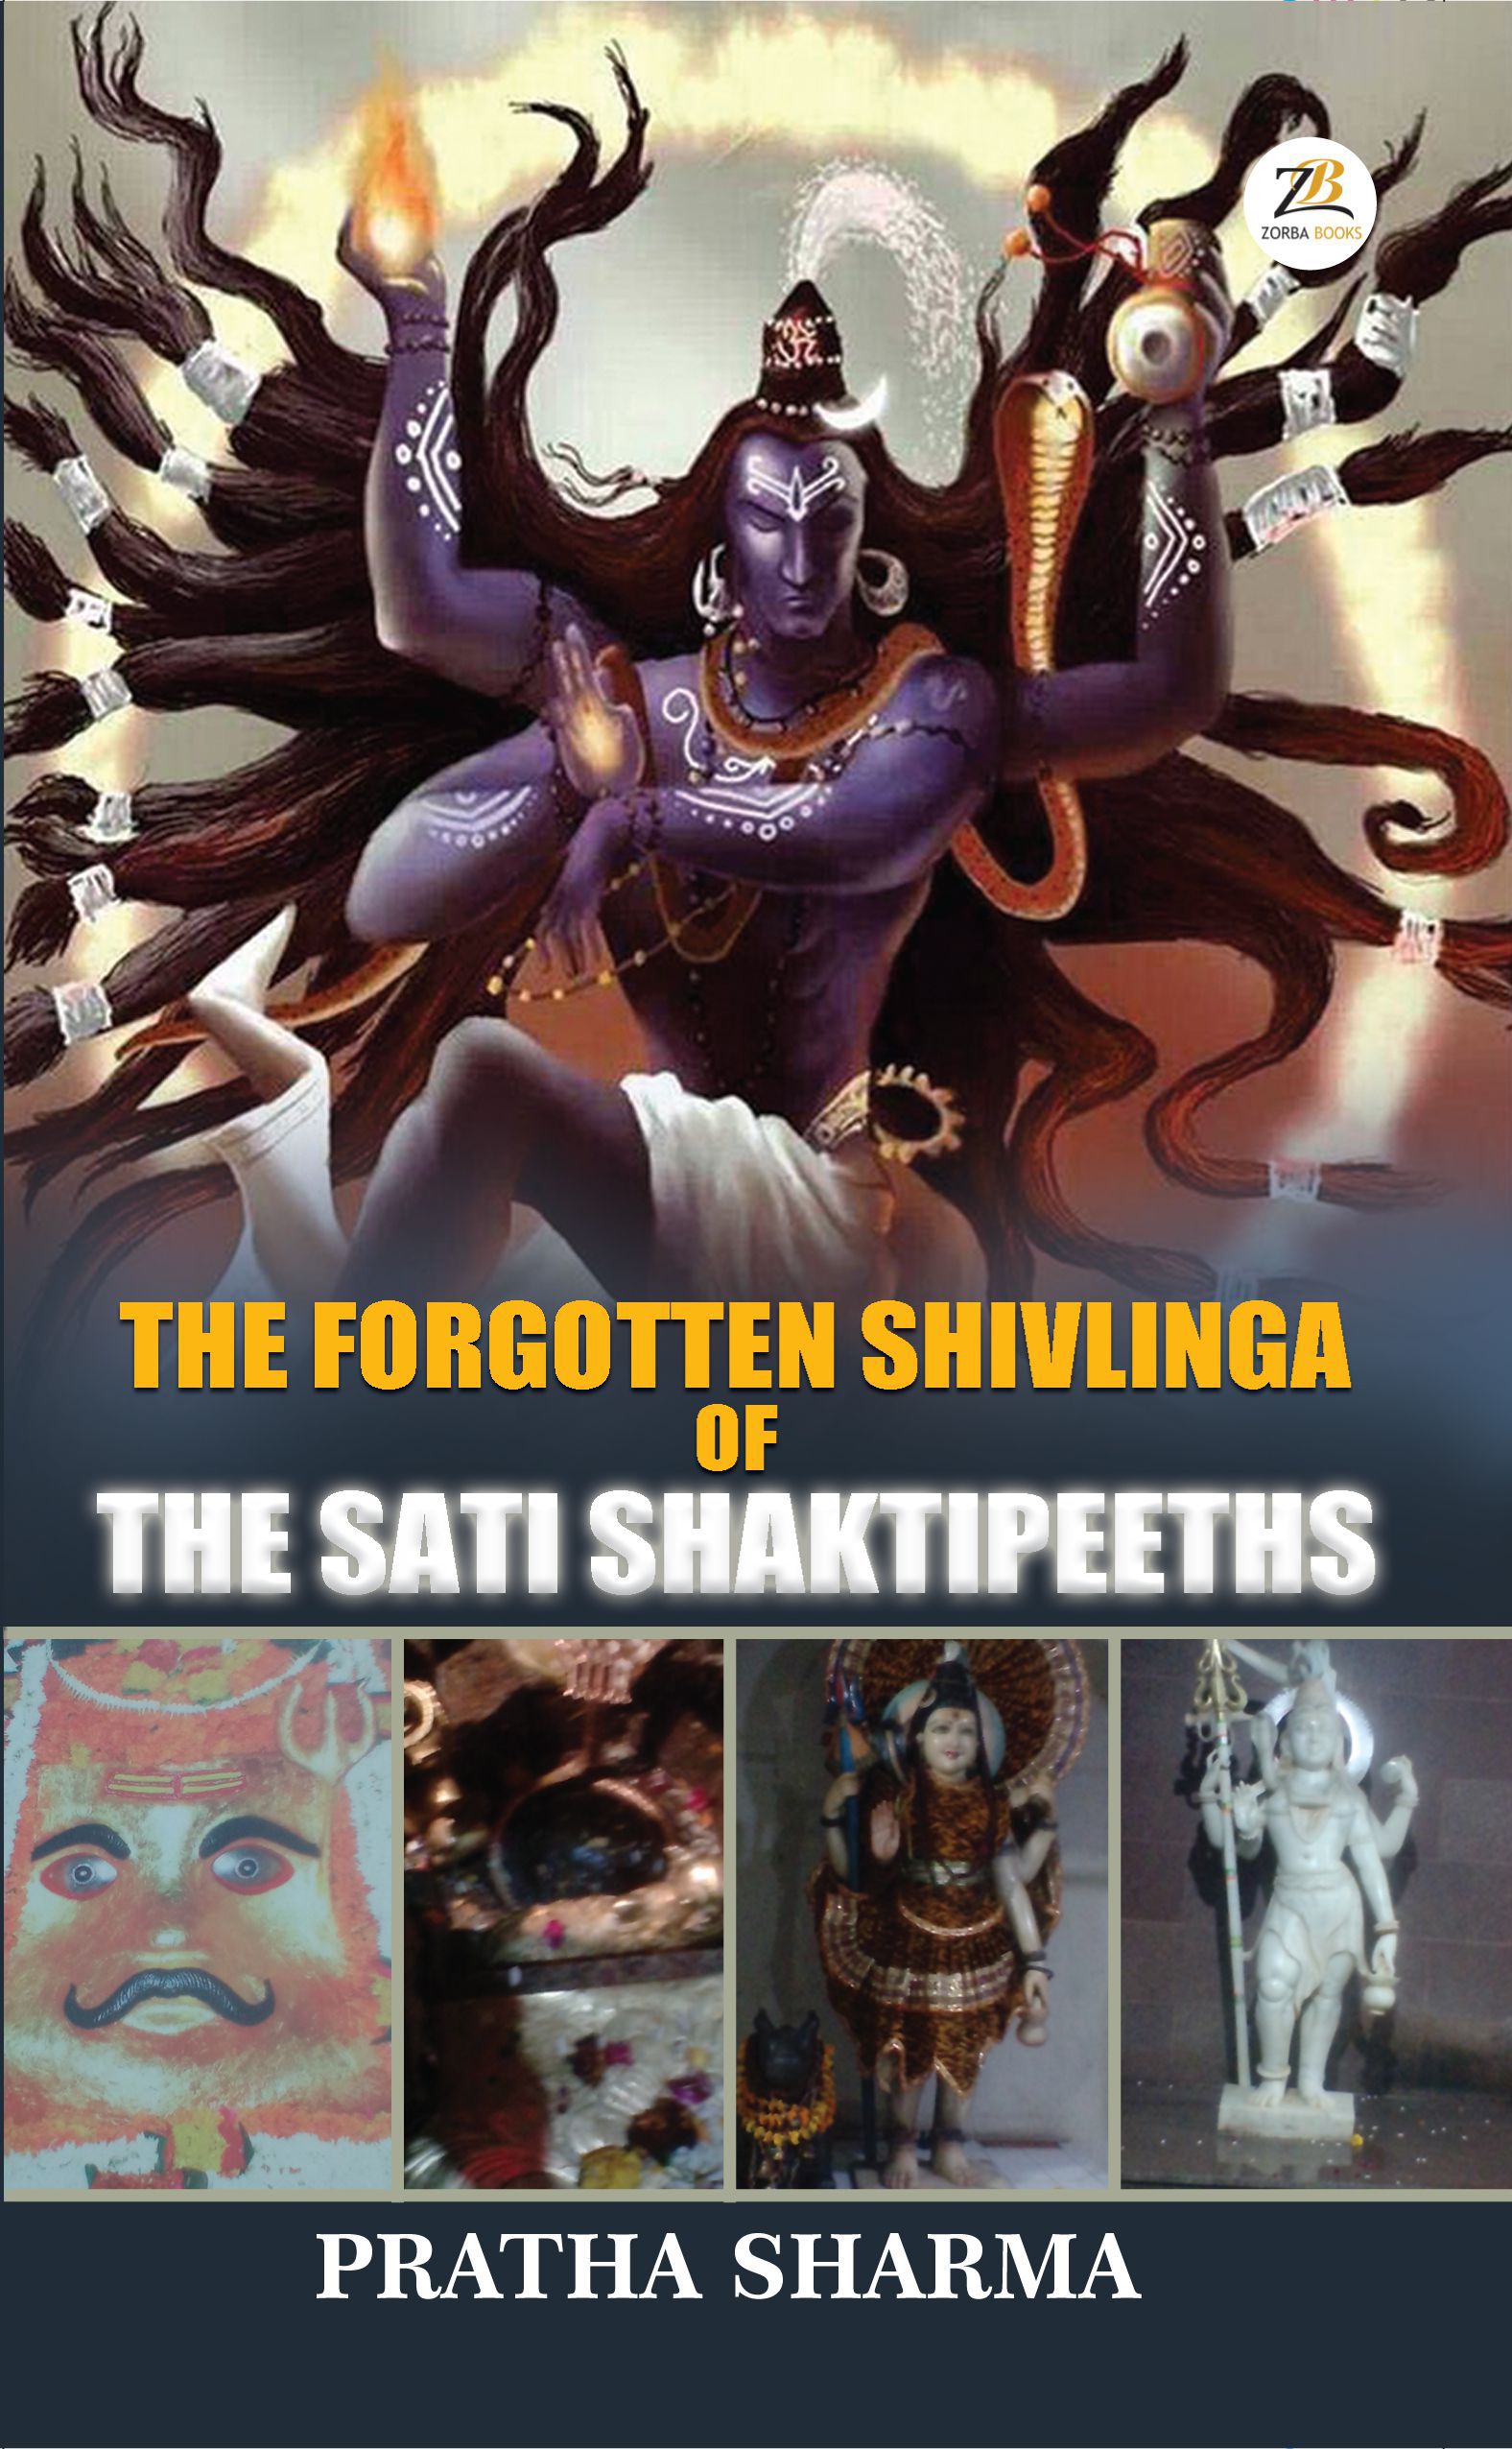 The Forgotten Shivlings of Sati Shaktipeeths